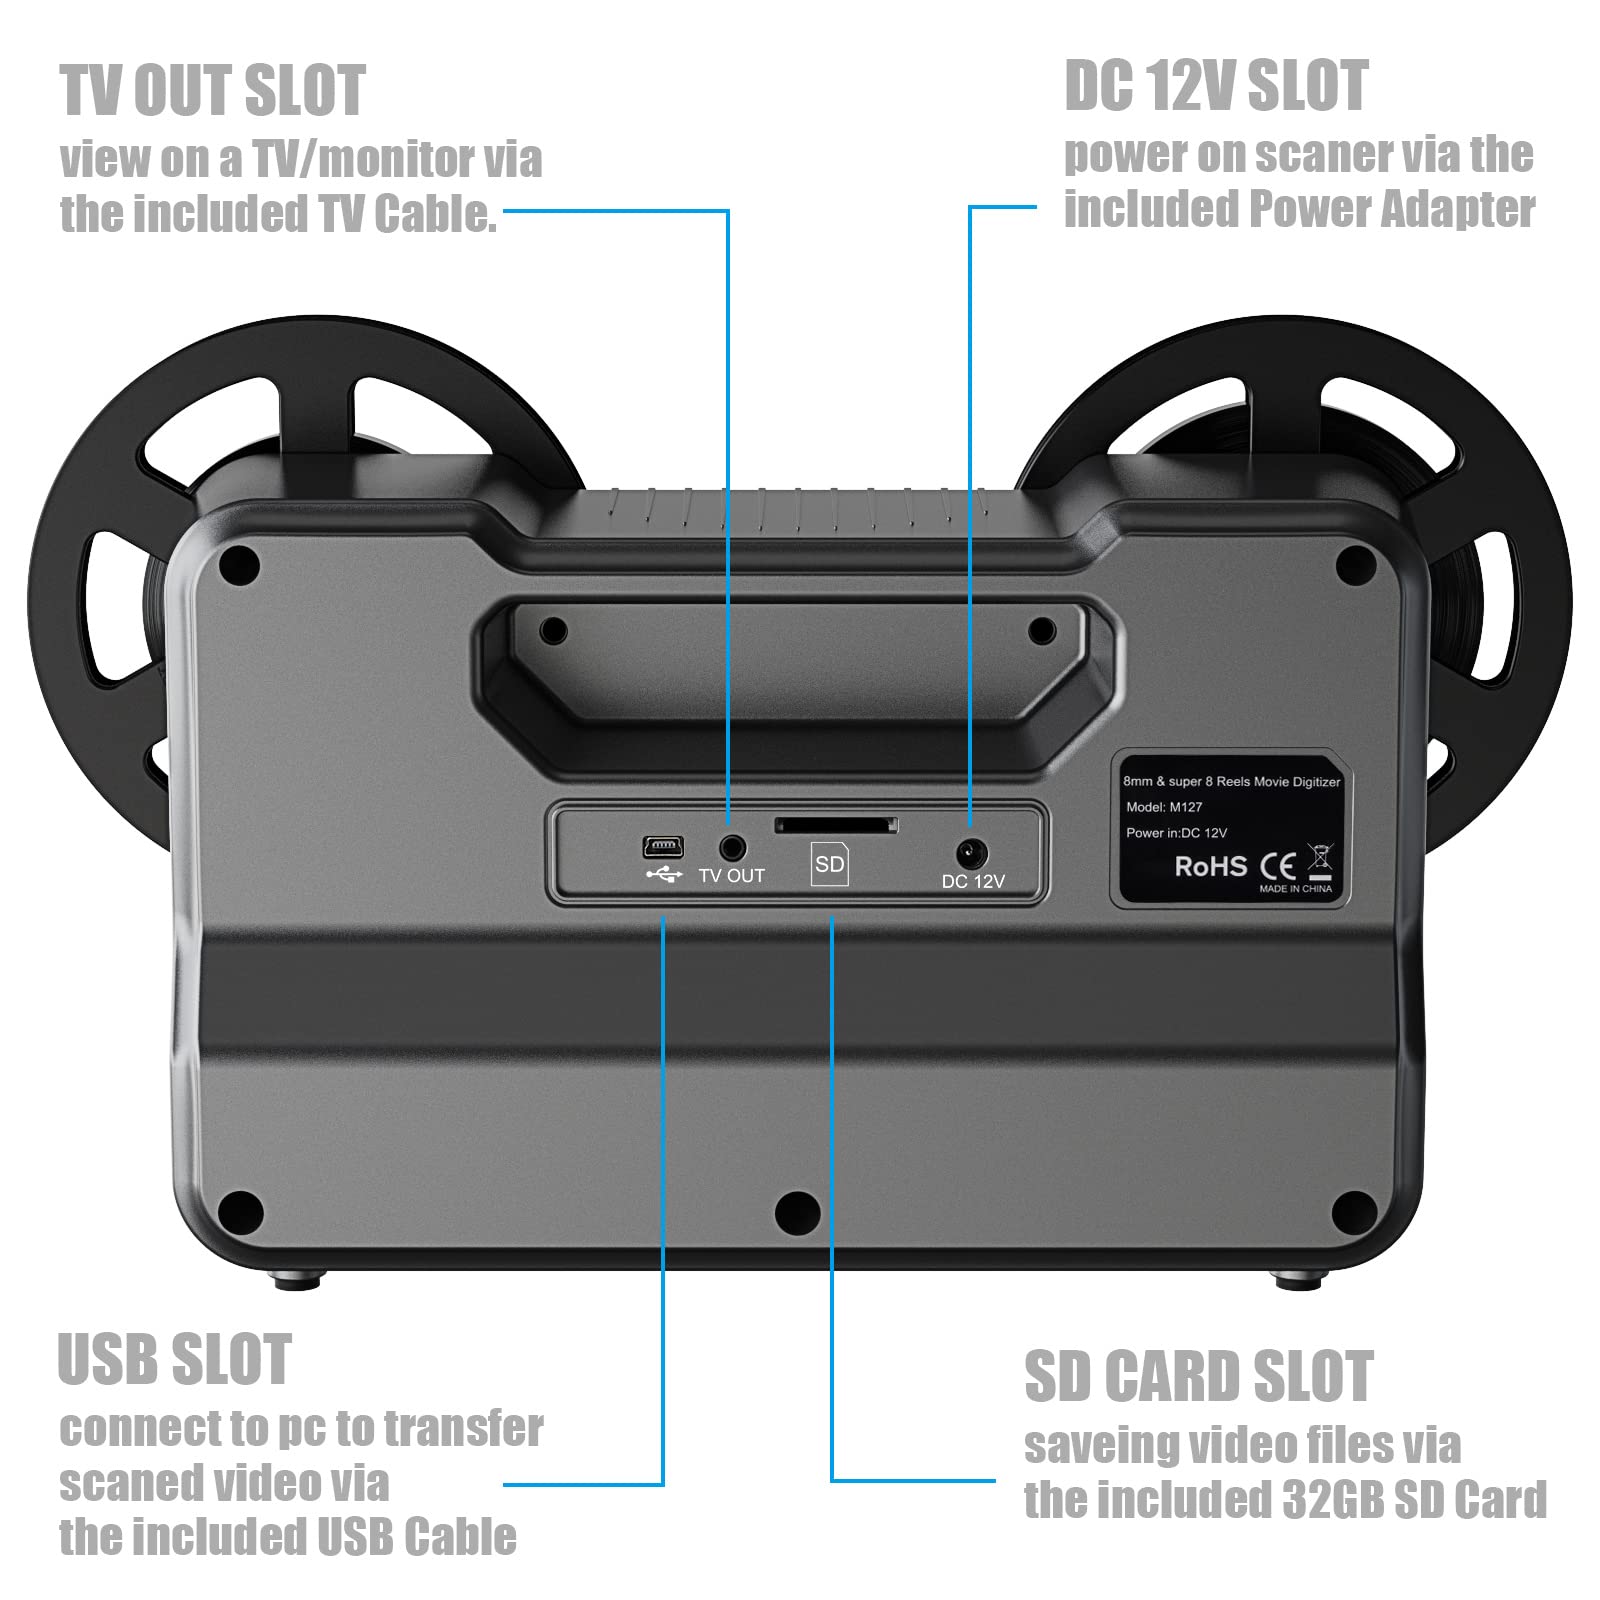 Winait Super 8/8mm Digital Roll Film Scanner, Converts Film into